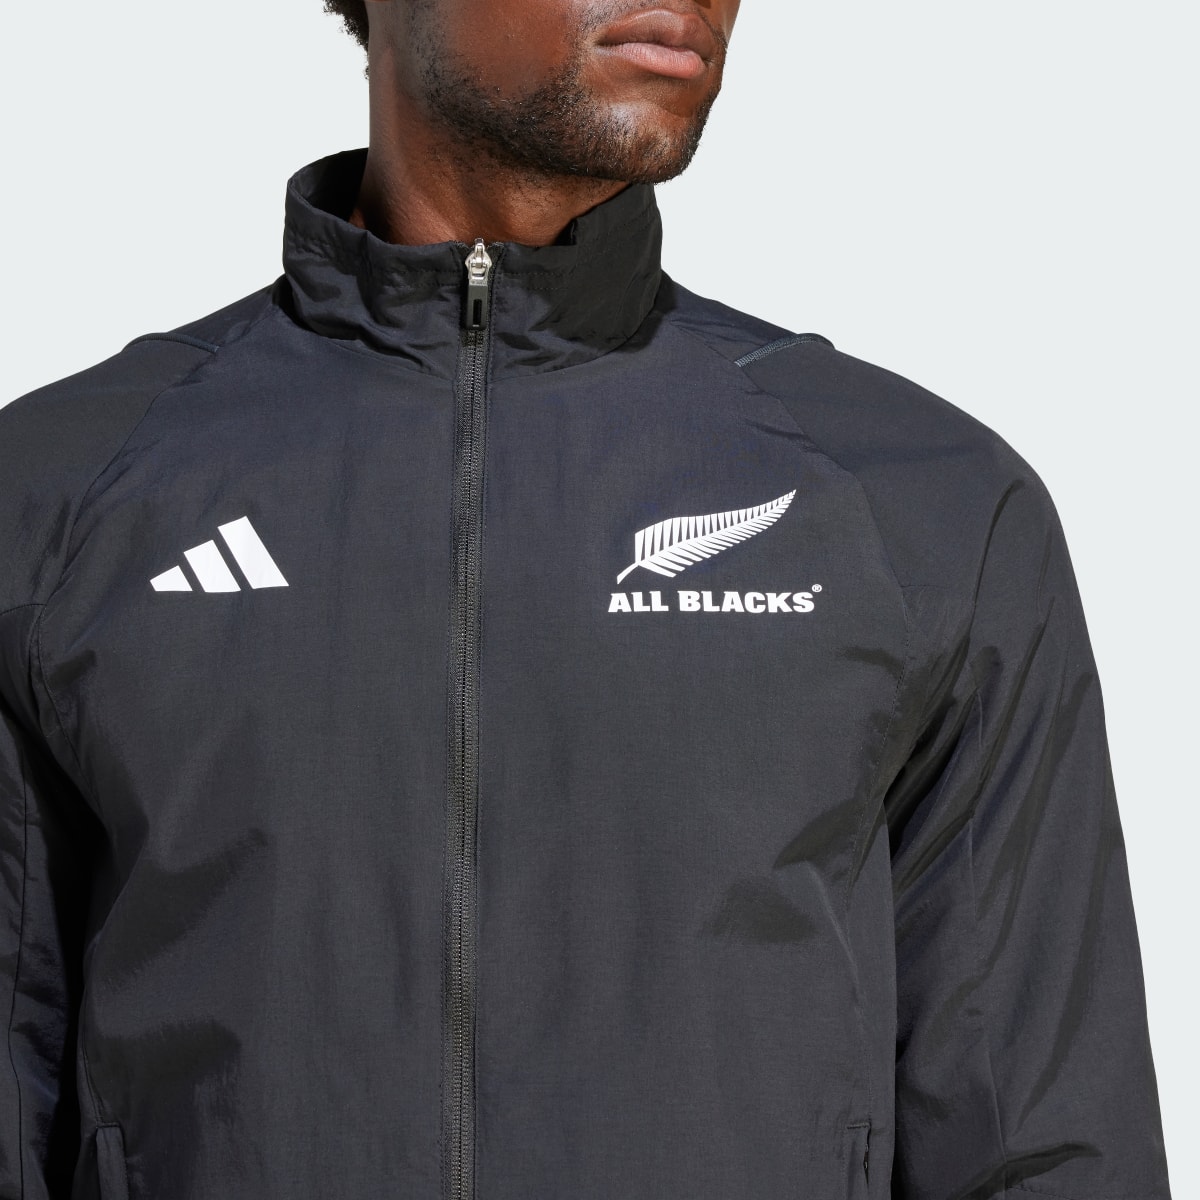 Adidas Veste de survêtement de rugy All Blacks. 9